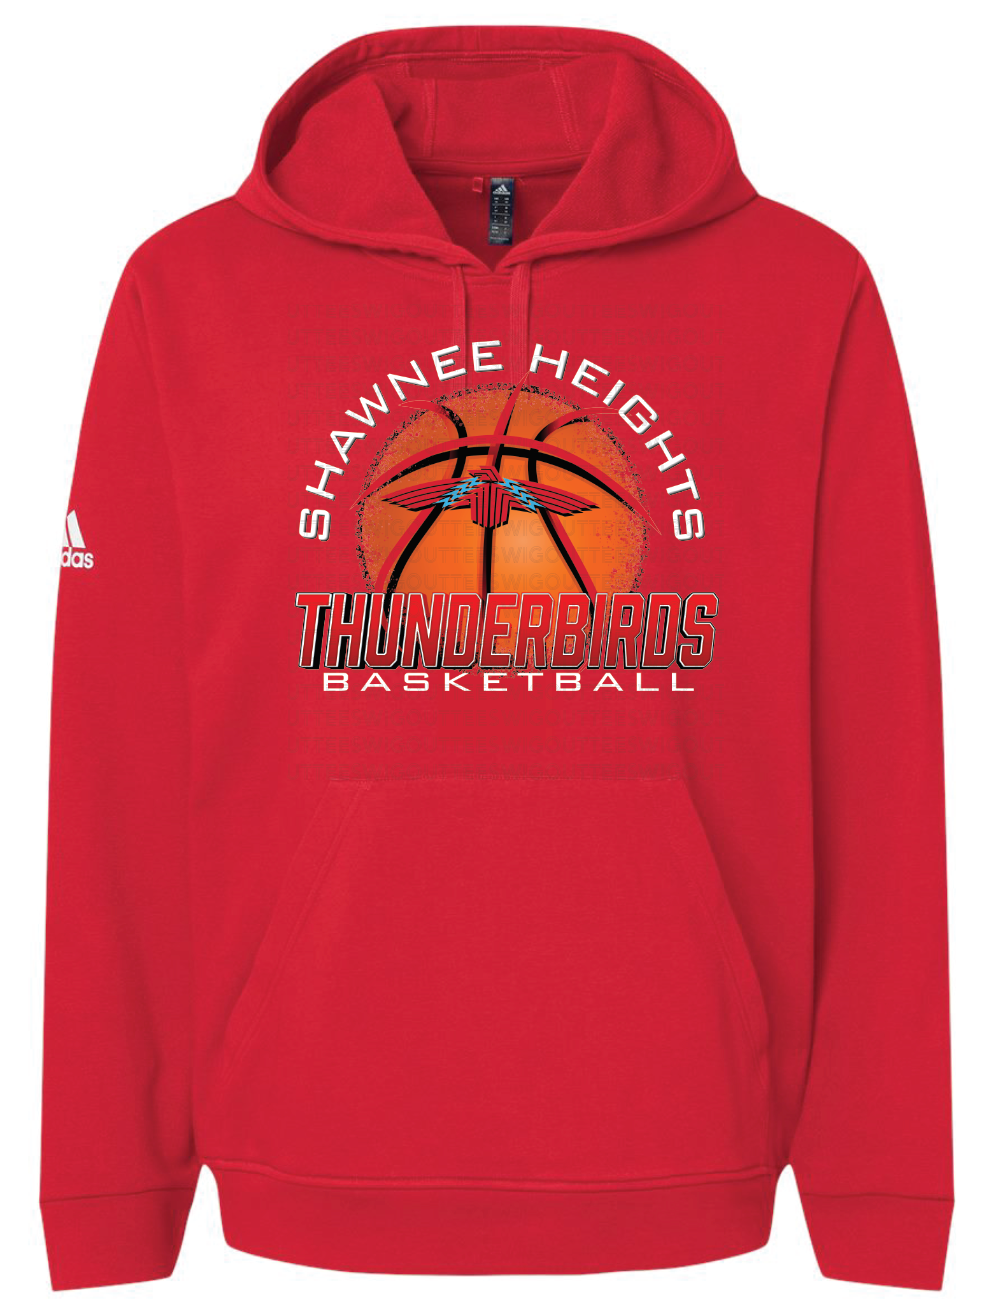 Thunderbirds Basketball Adidas Fleece Hooded Sweatshirt